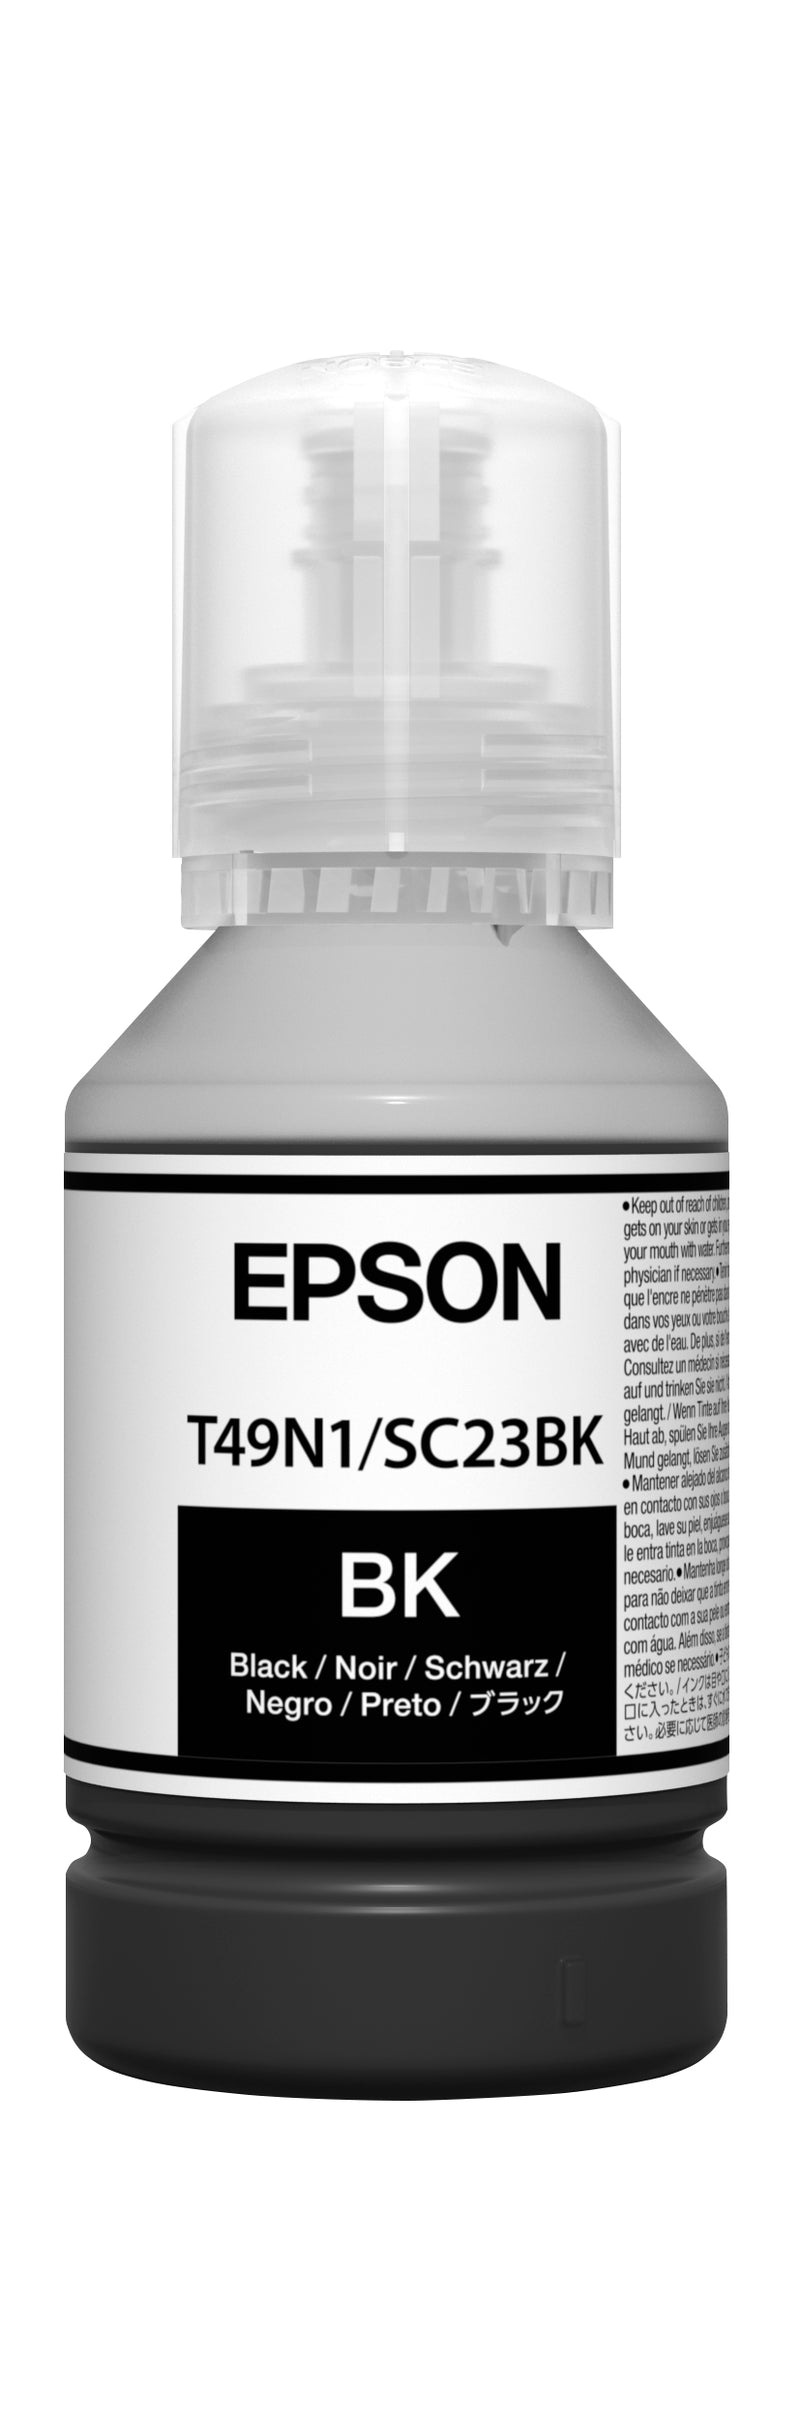 Epson C13T49H100 recarga de tinteiro de impressora